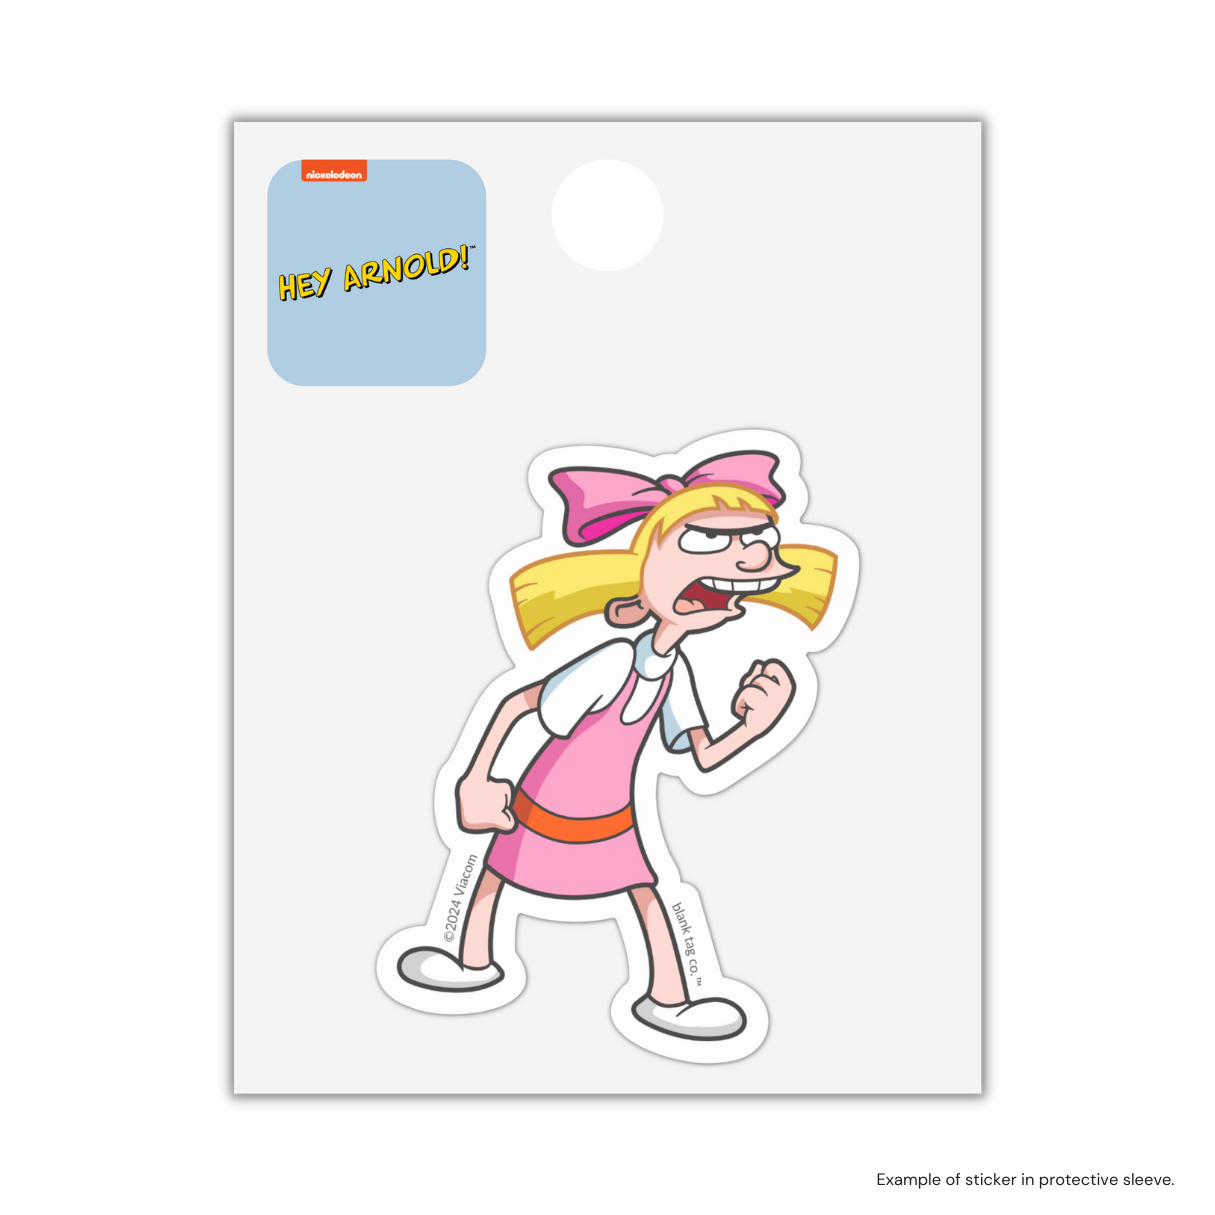 The Helga G. Pataki Sticker